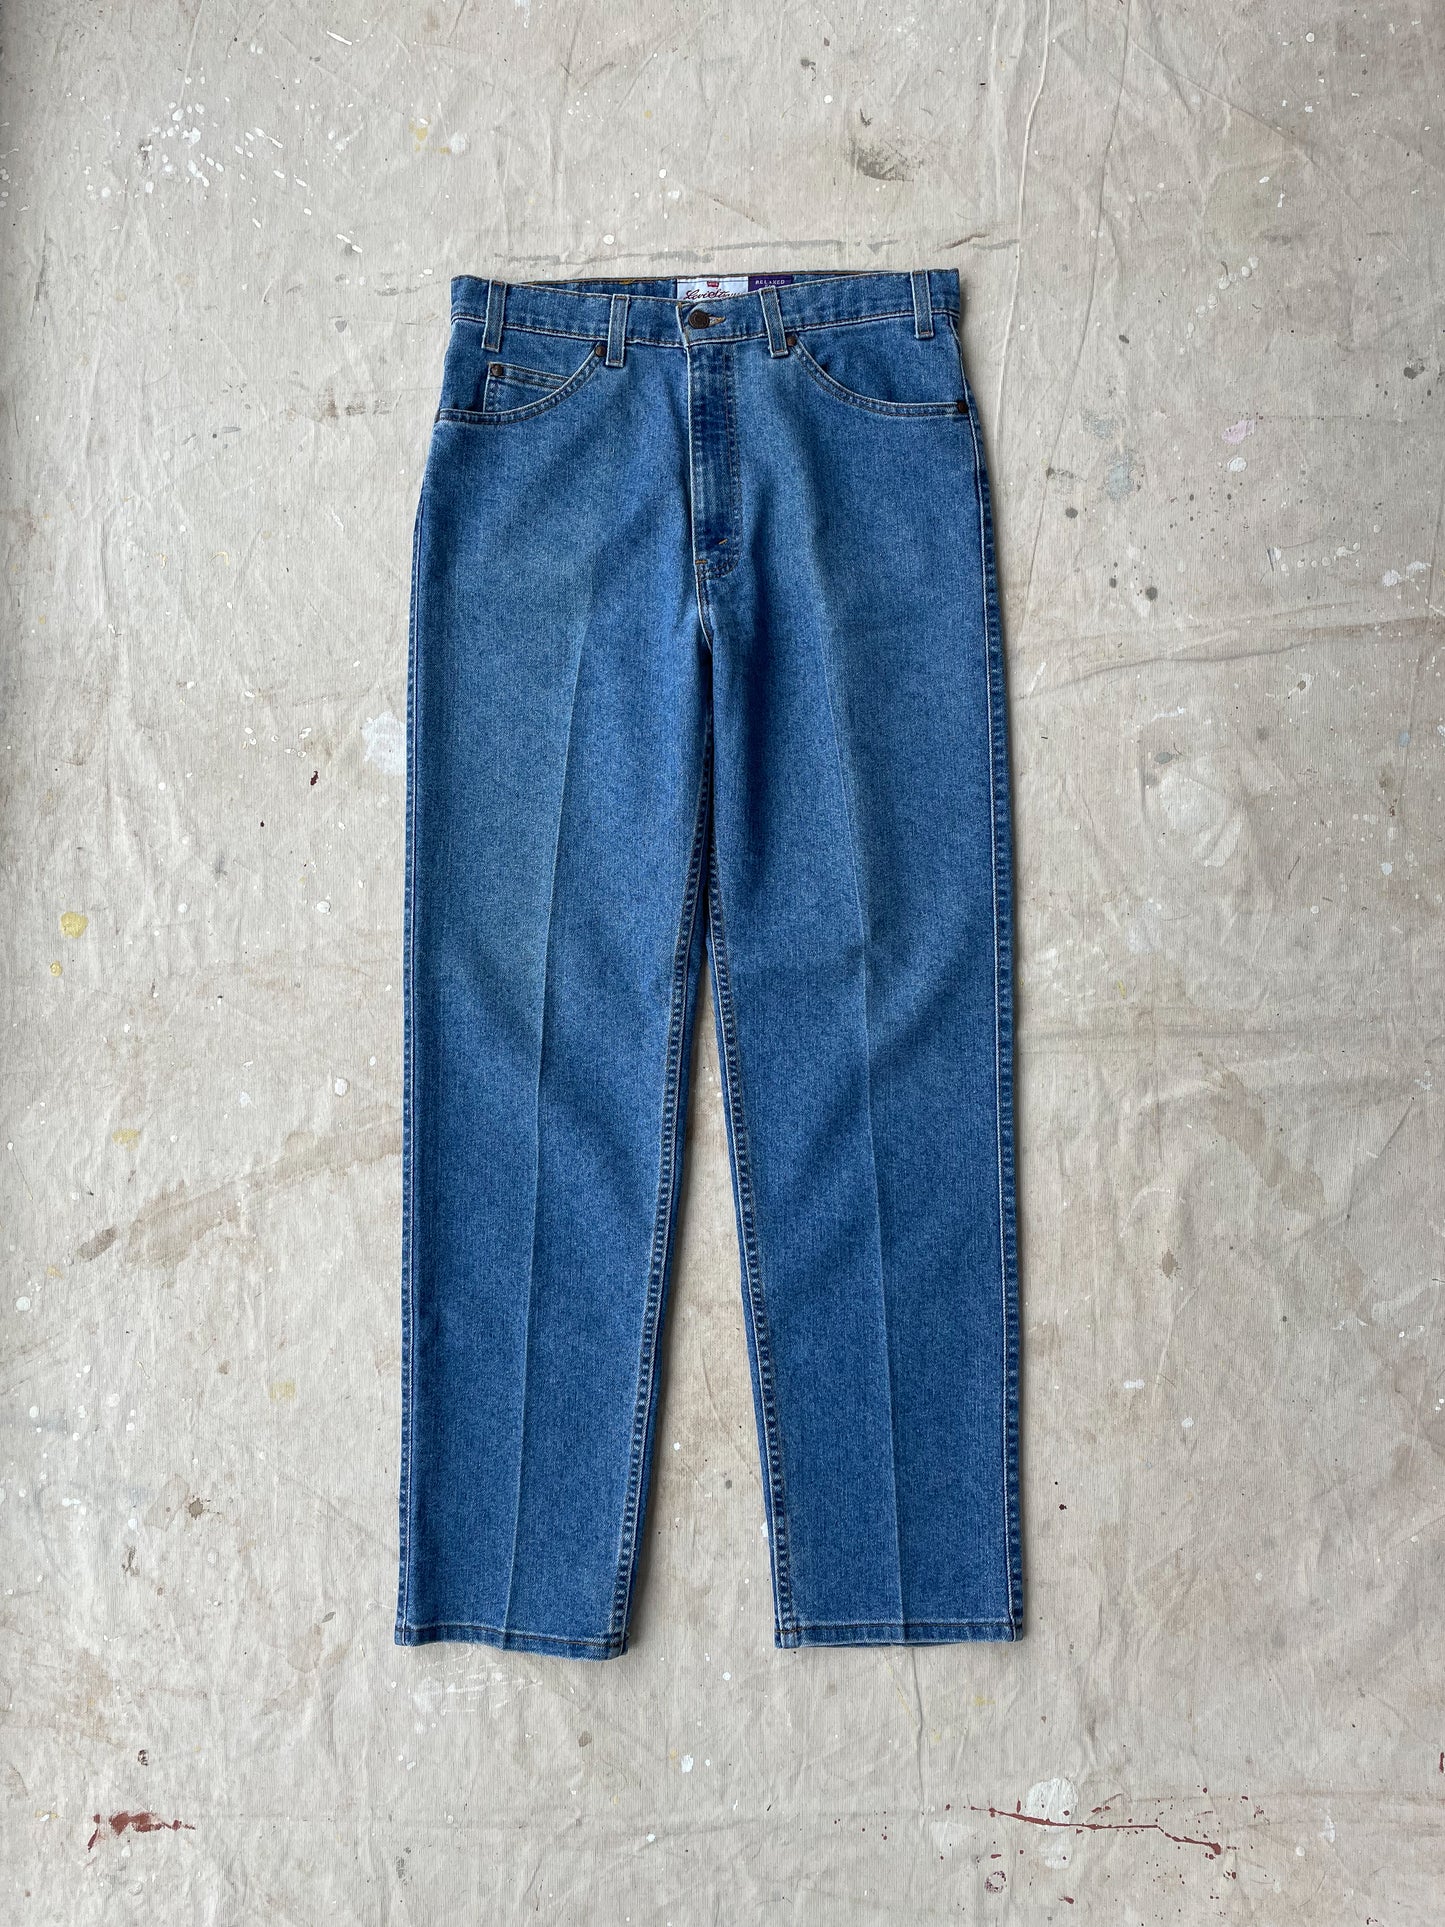 90's Levi's 540 Jeans—[33x32]